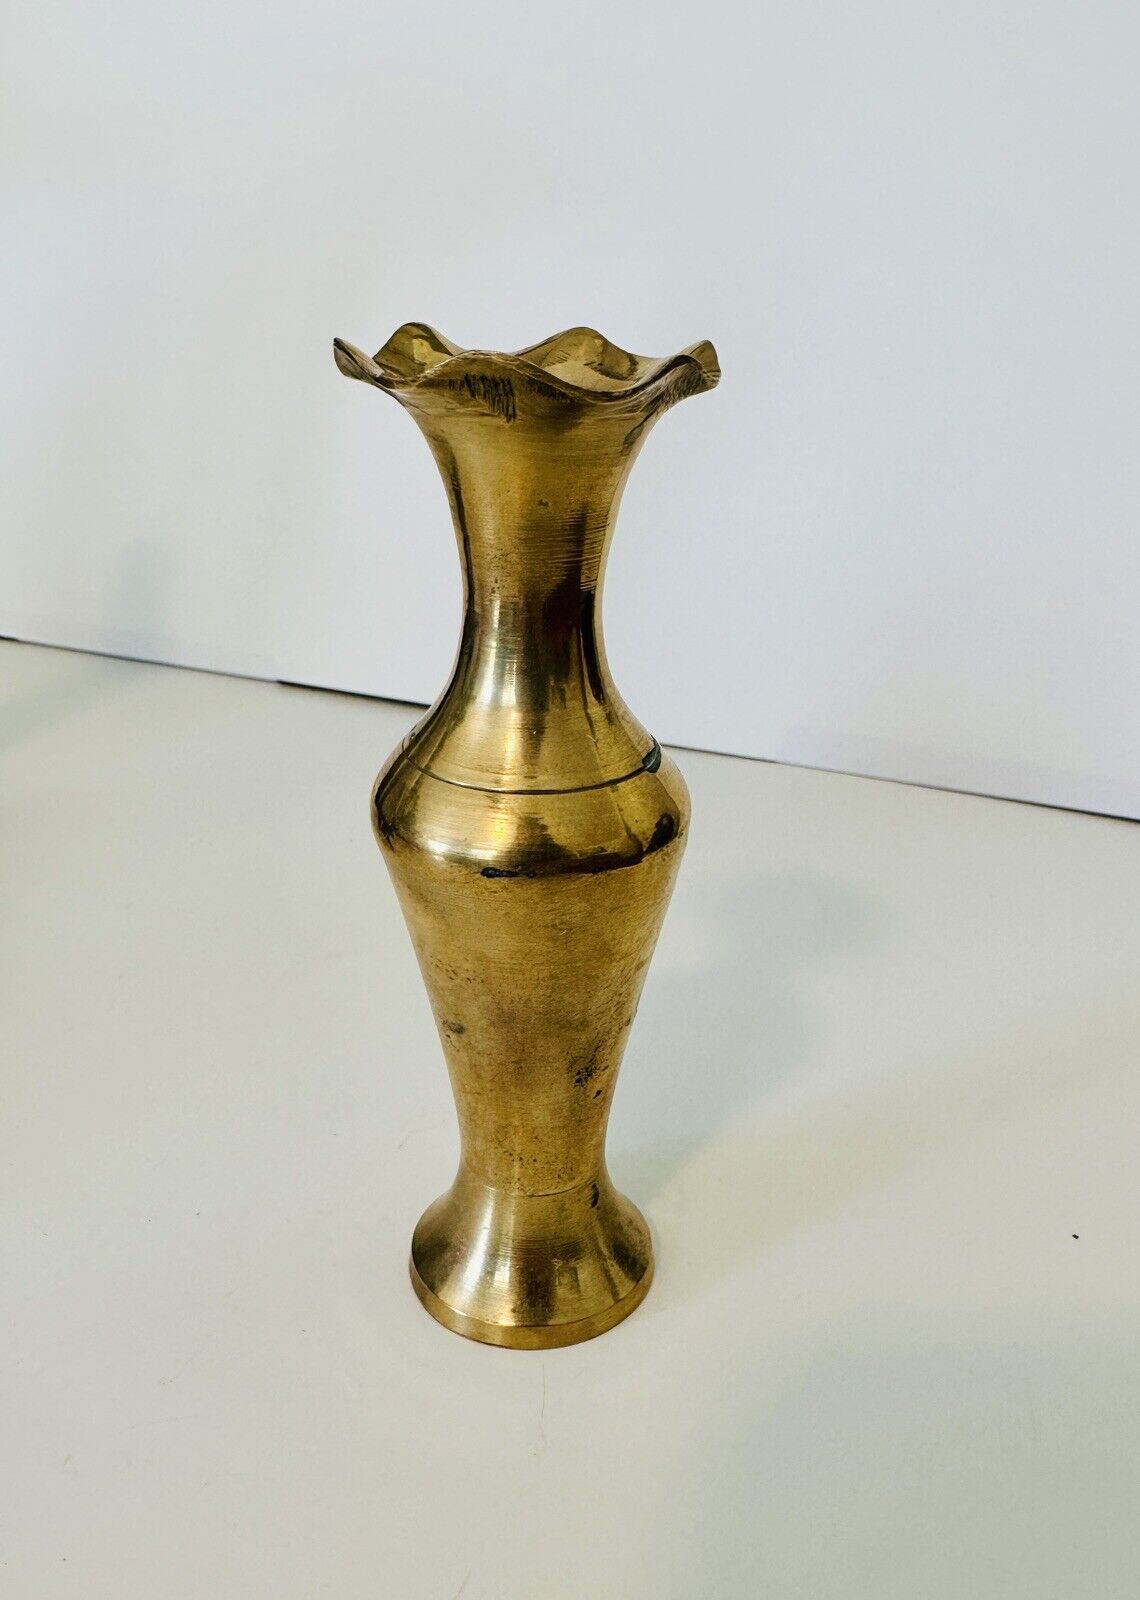 6” Ruffle Top Brass Vase Vintage MCM Retro